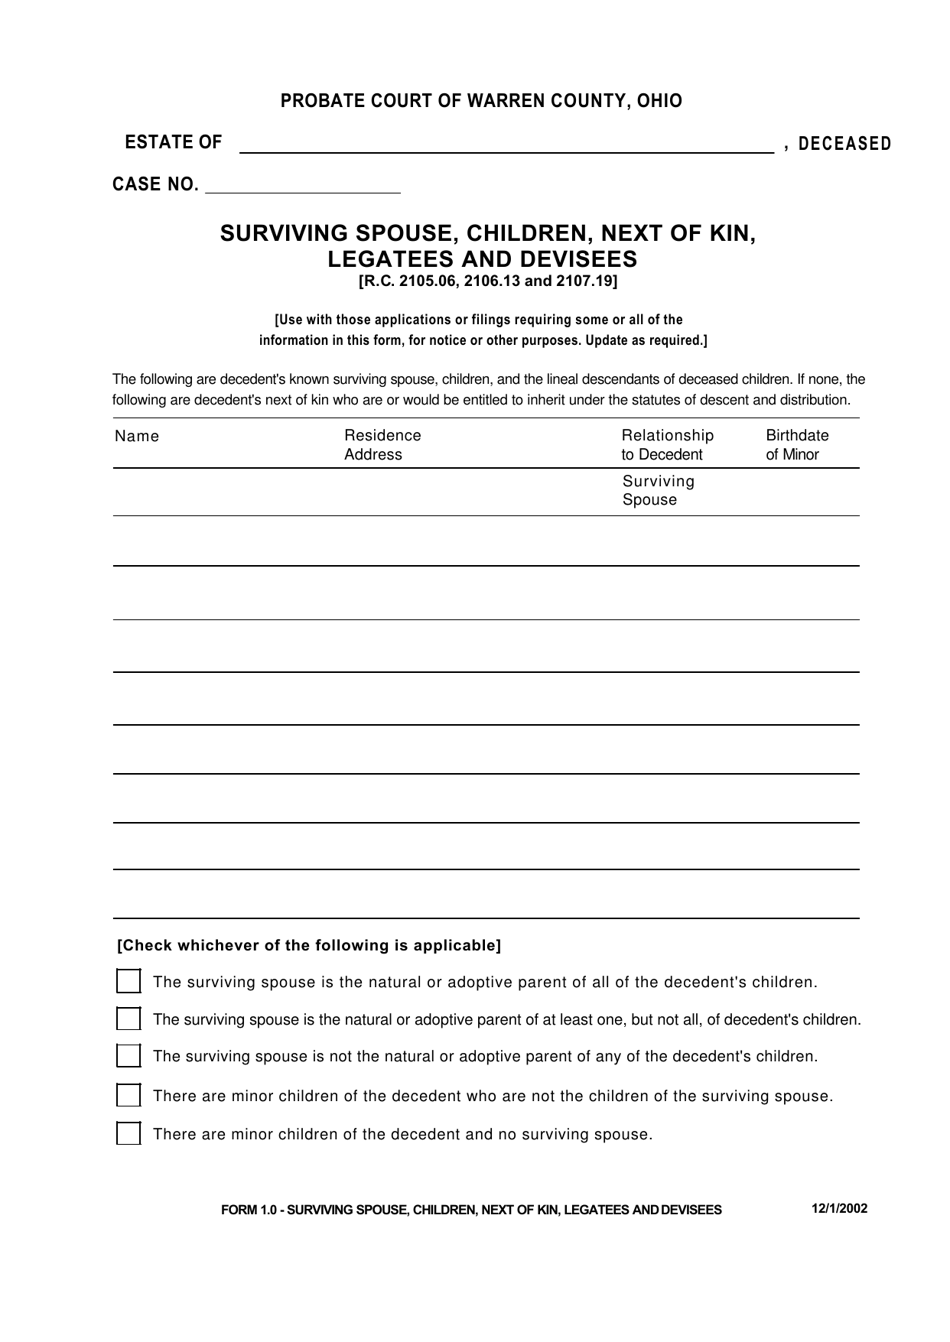 Form 1.0 Surviving Spouse, Children, Next of Kin, Legatees and Devisees - Warren County, Ohio, Page 1